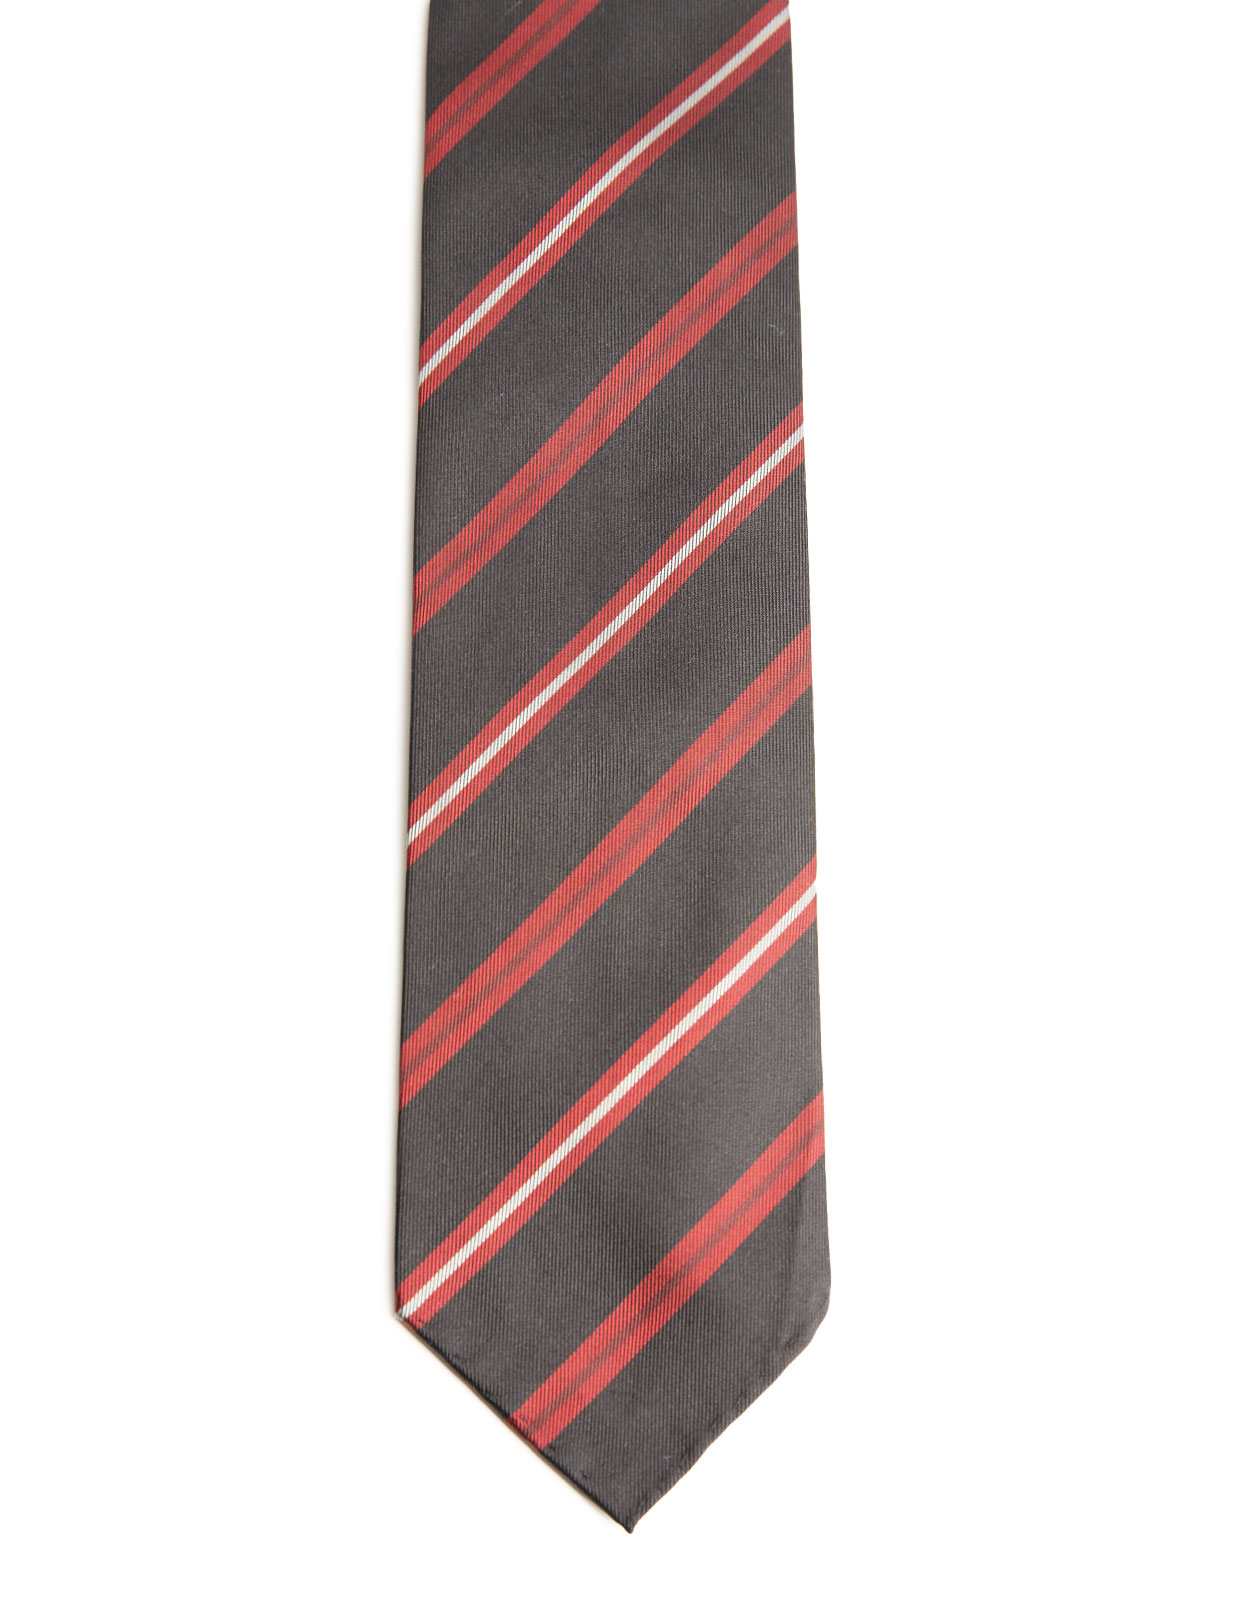 Untipped Silk Tie Black/Red Stripe